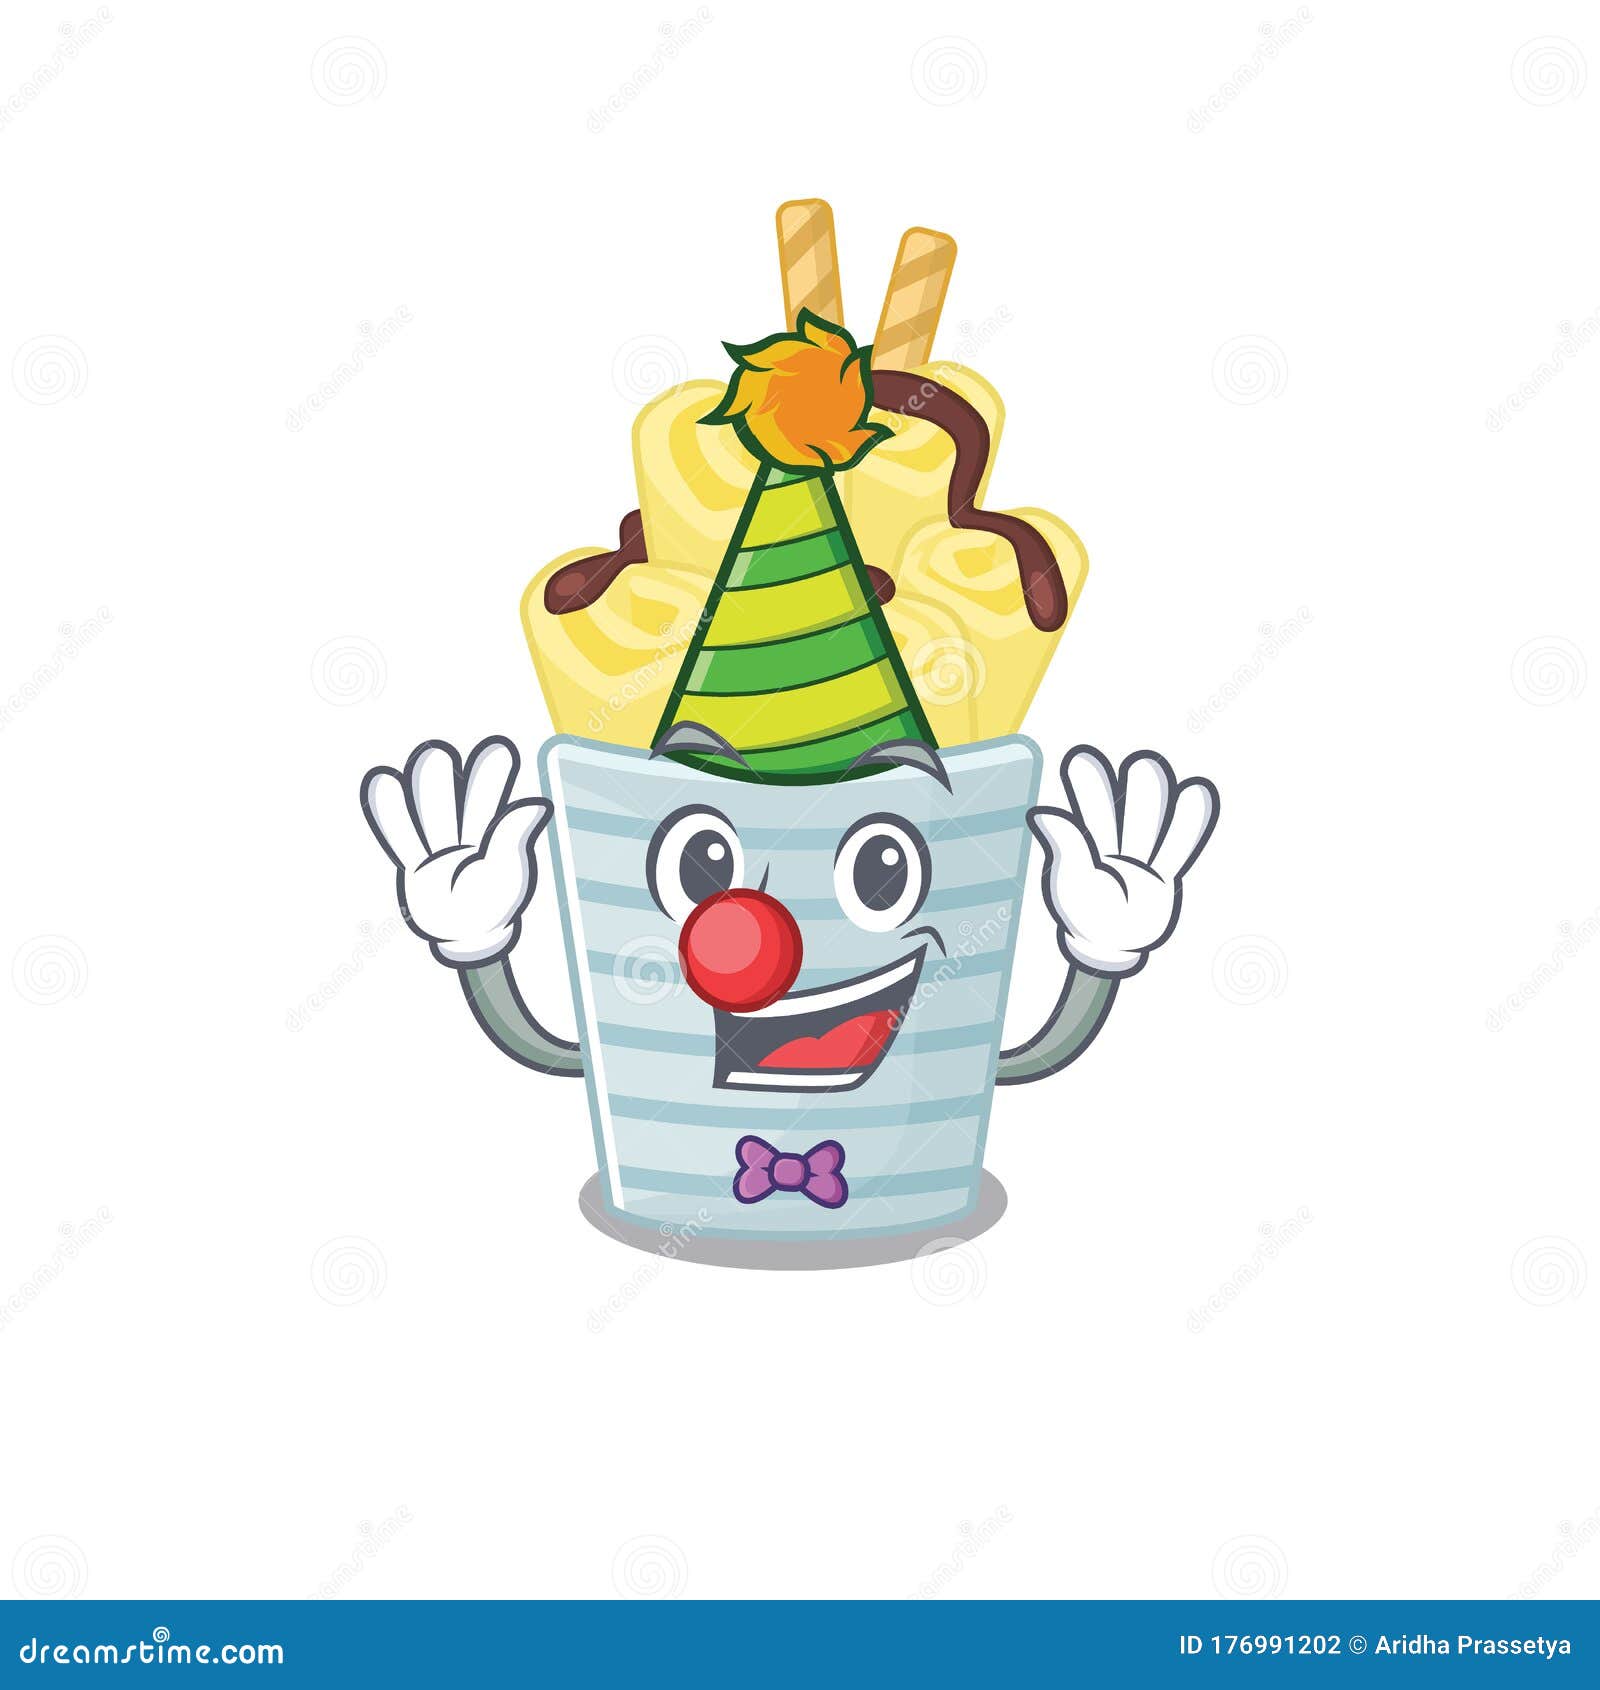 Cute And Funny Clown Ice Cream  Banana  Rolls Cartoon  